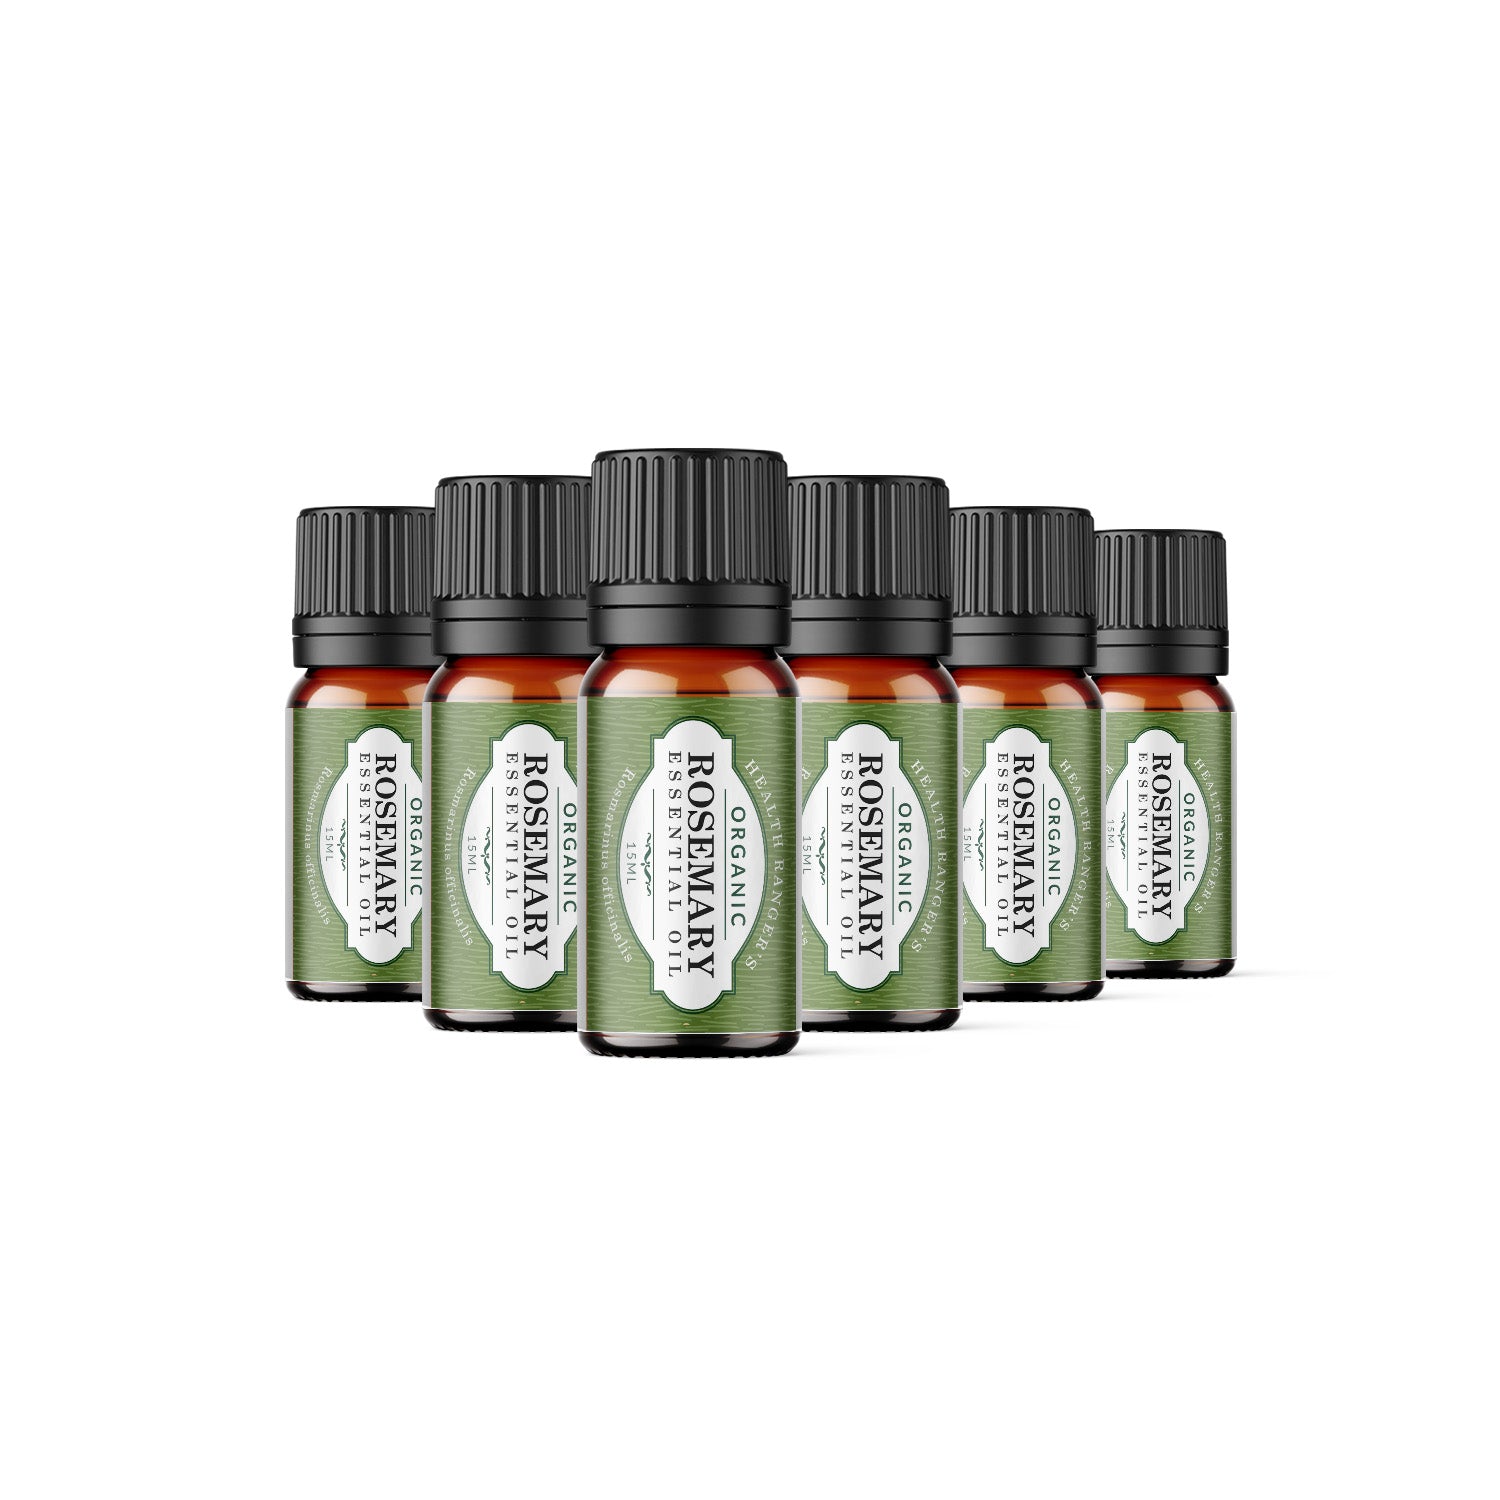 Organic Rosemary Essential Oil 0.5oz (15ml) (6-Pack)